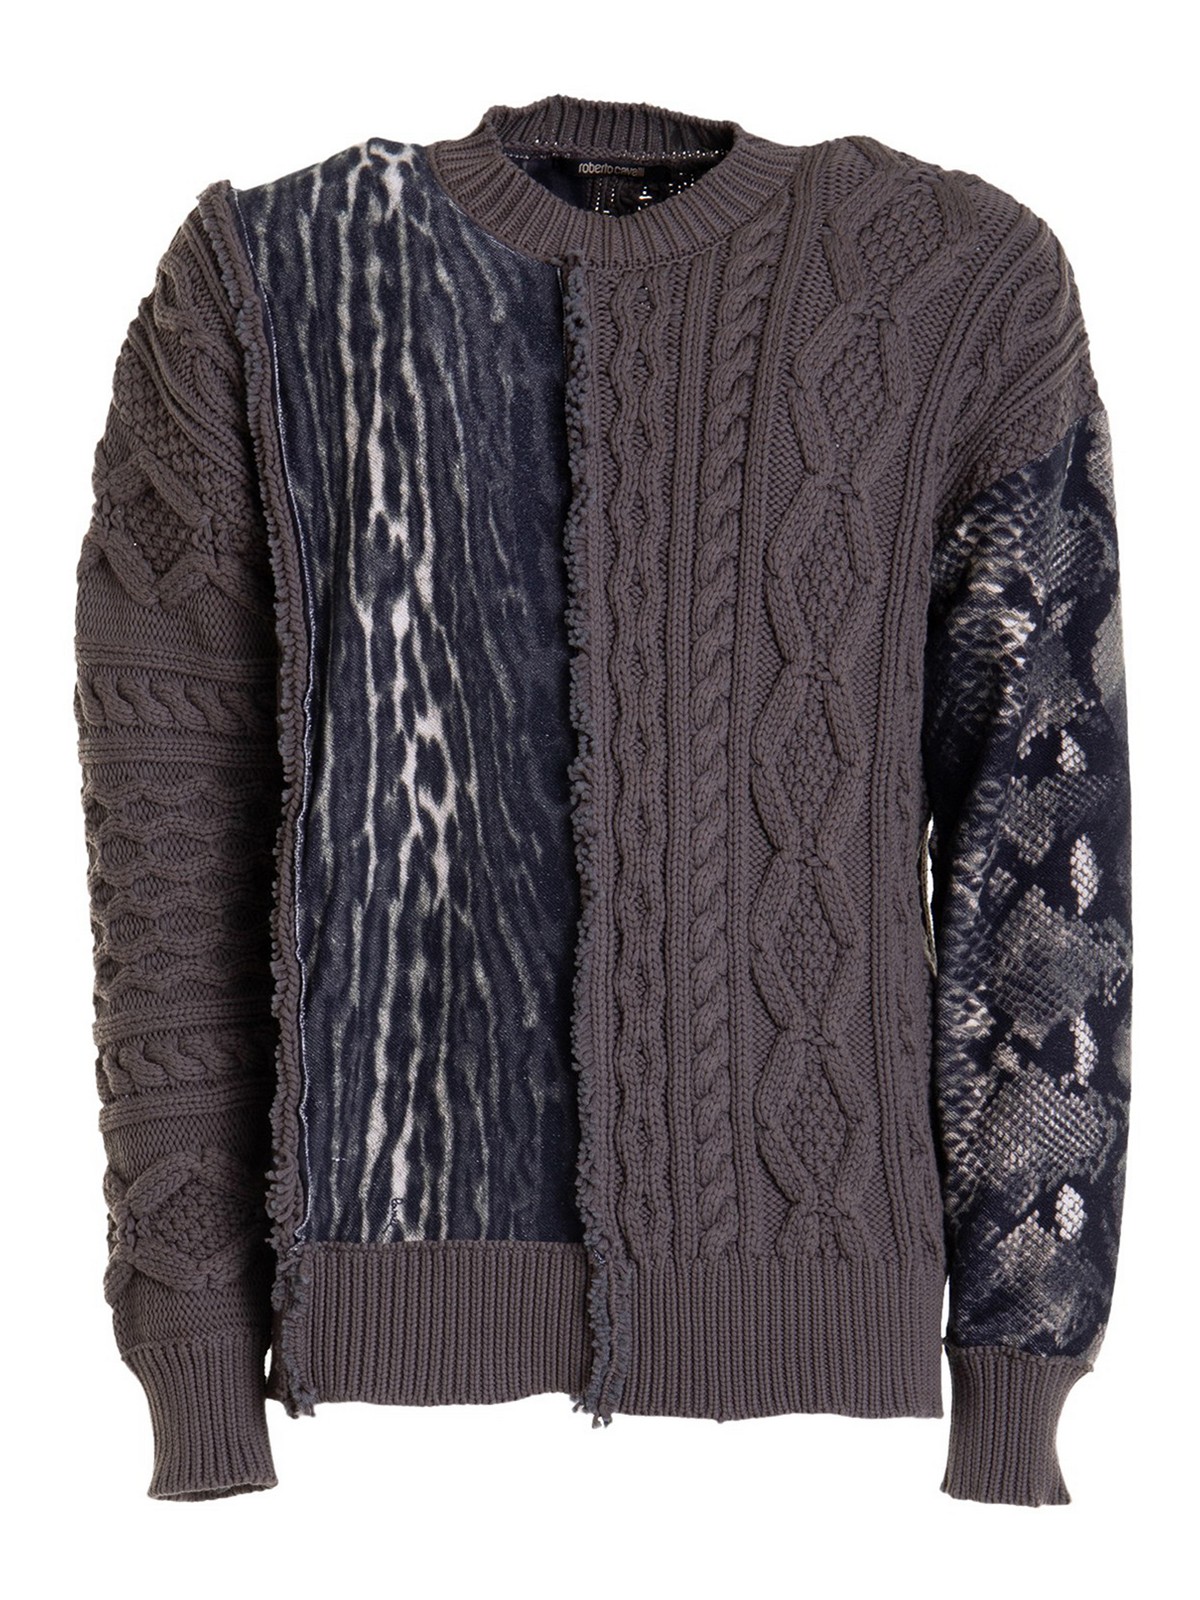 Roberto Cavalli Brown Cotton Blend Sweater